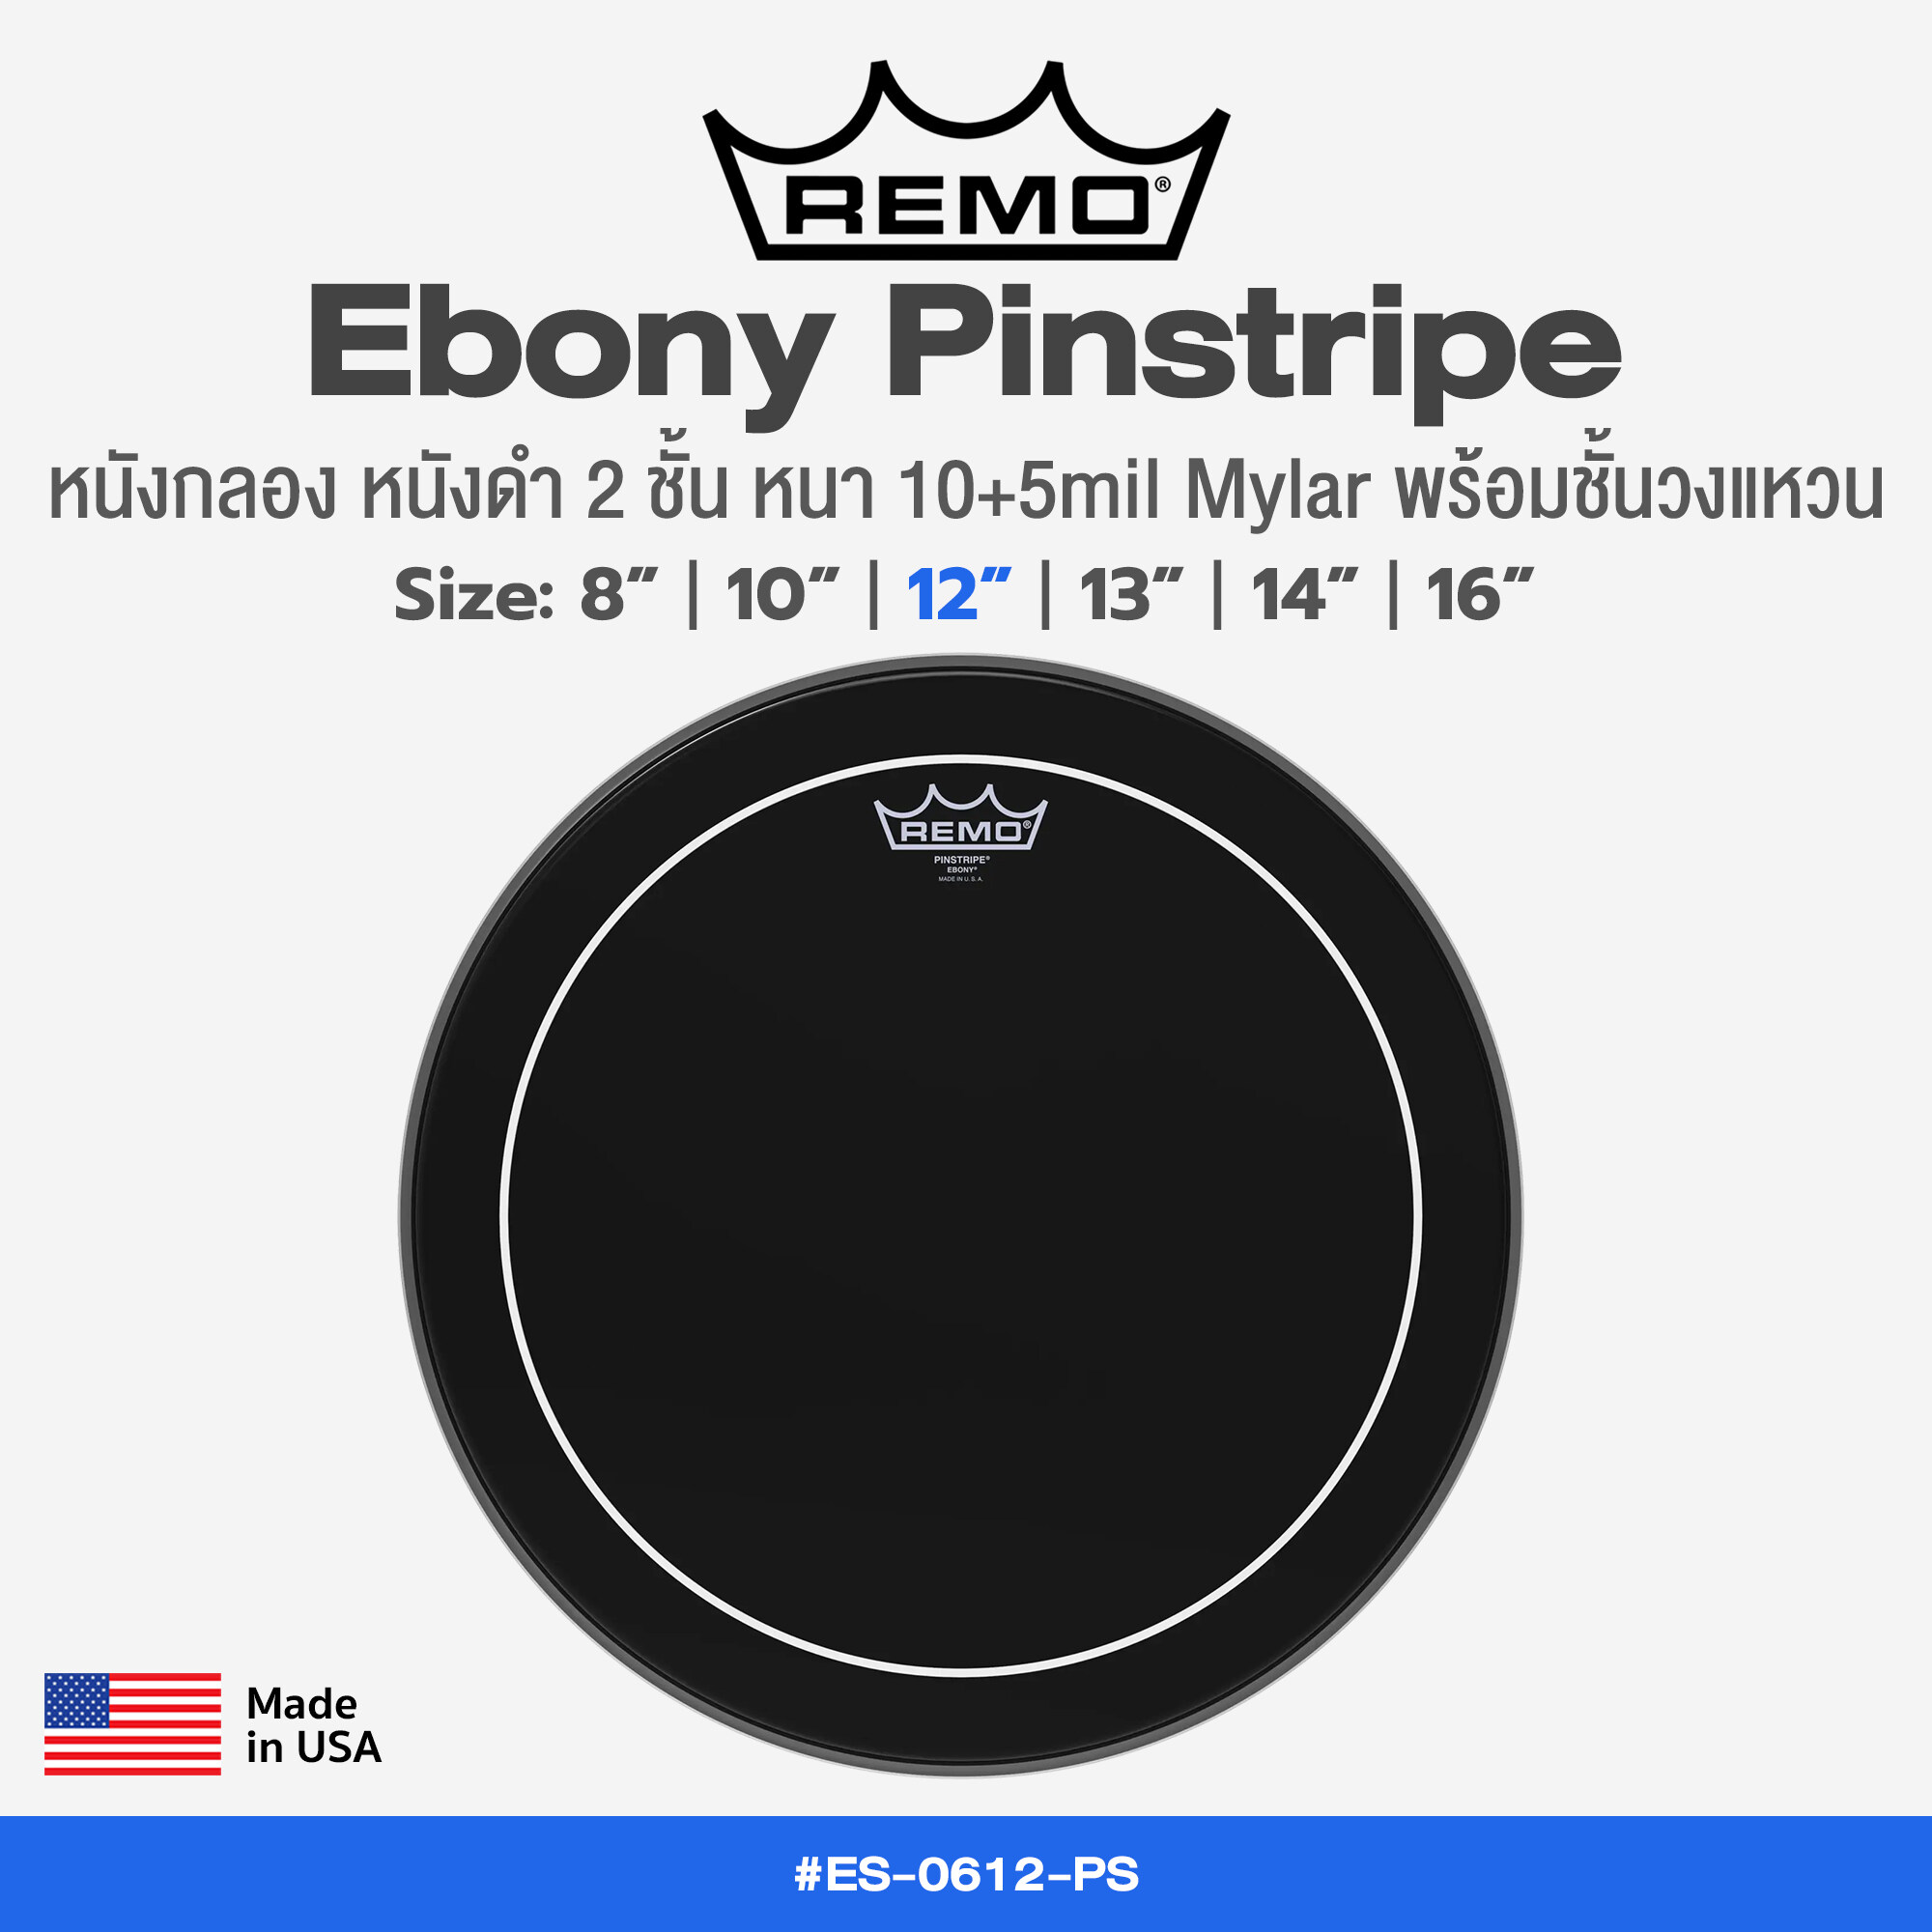 Remo Ebony Pinstripe